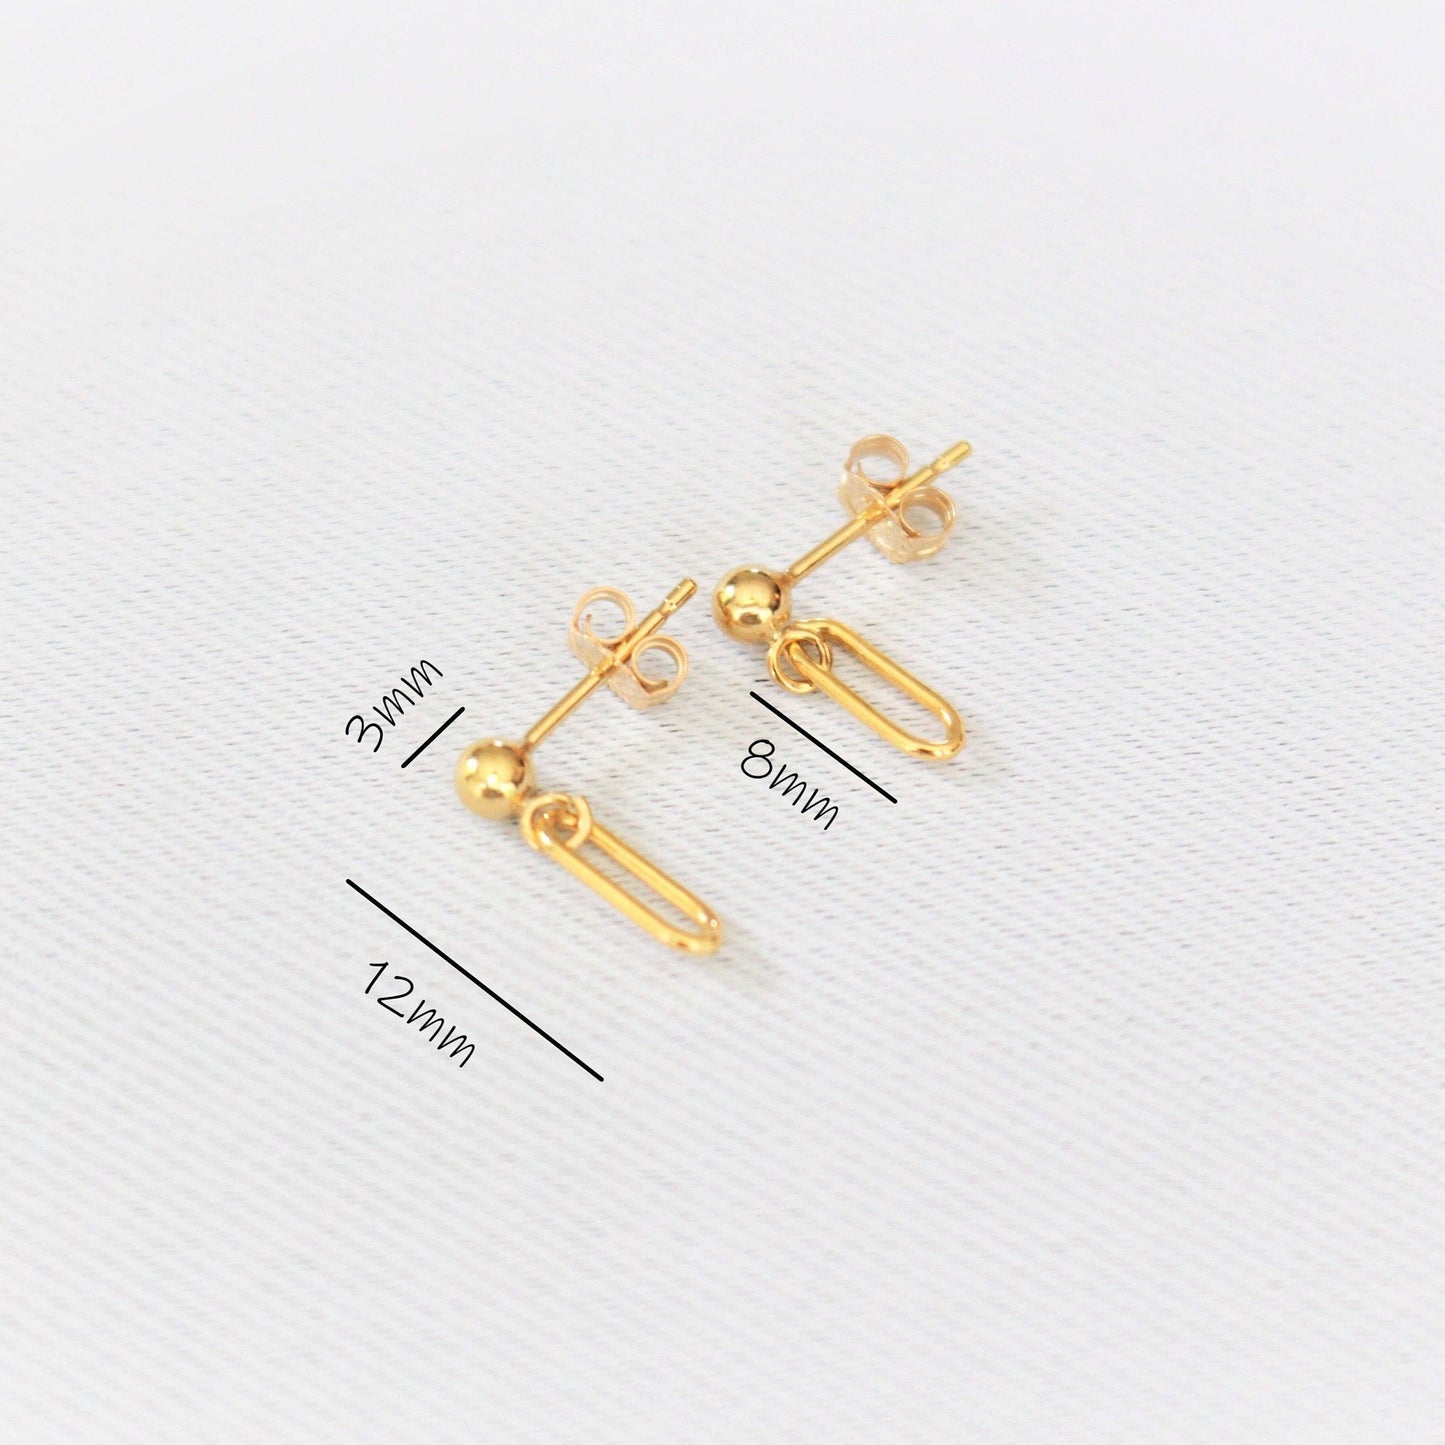 Genuine 14k Gold Filled Earrings ∙ Pendant rectangle rings stud ∙ Birthday Gift ∙ Minimalist jewel ∙ Bridesmaid gift ∙ Cute dainty